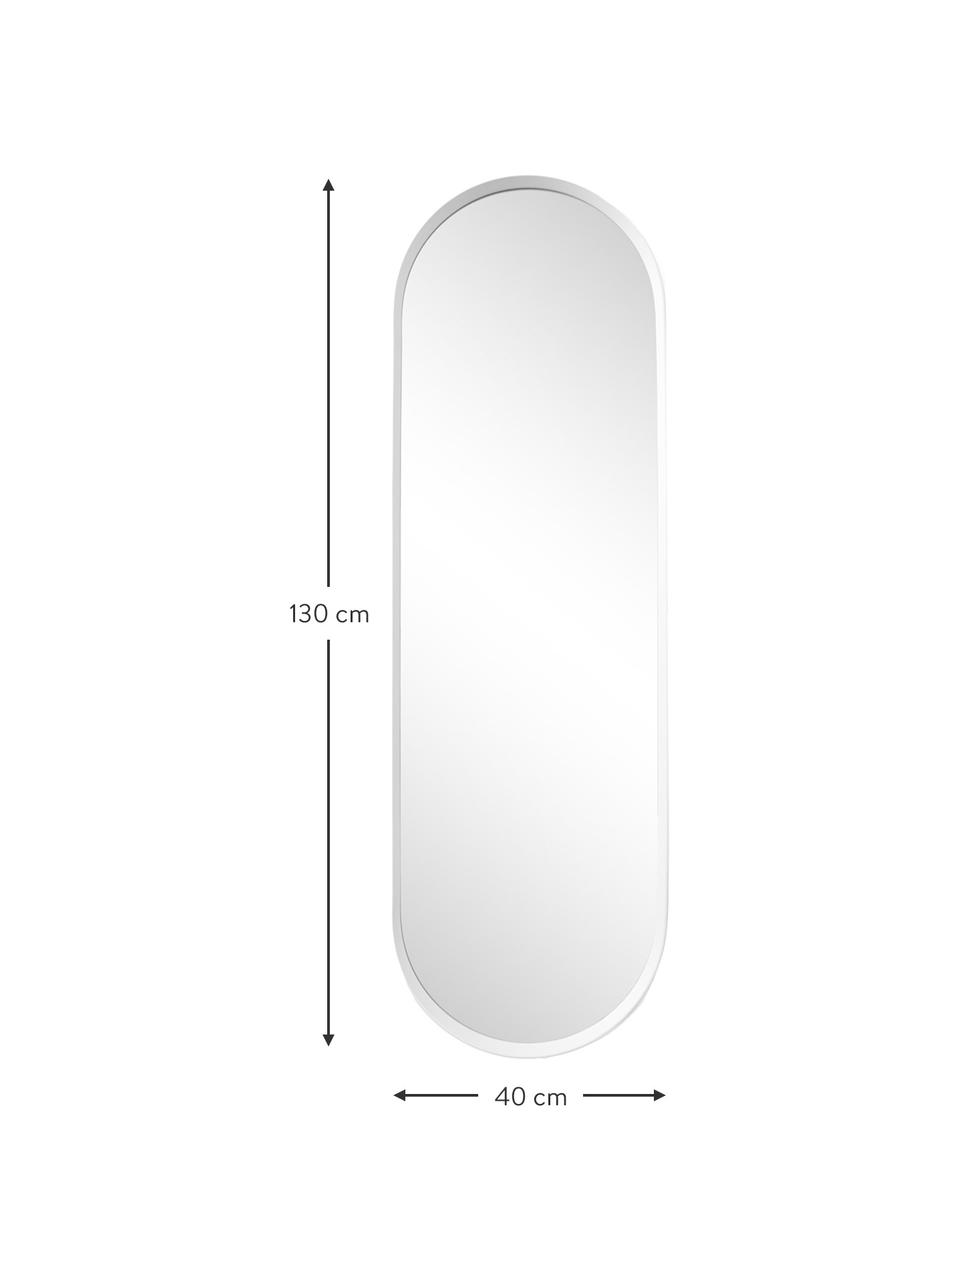 Ovaler Wandspiegel Norm mit weissem Aluminiumrahmen, Rahmen: Aluminium, pulverbeschich, Spiegelfläche: Spiegelglas, Weiss, B 40 x H 130 cm